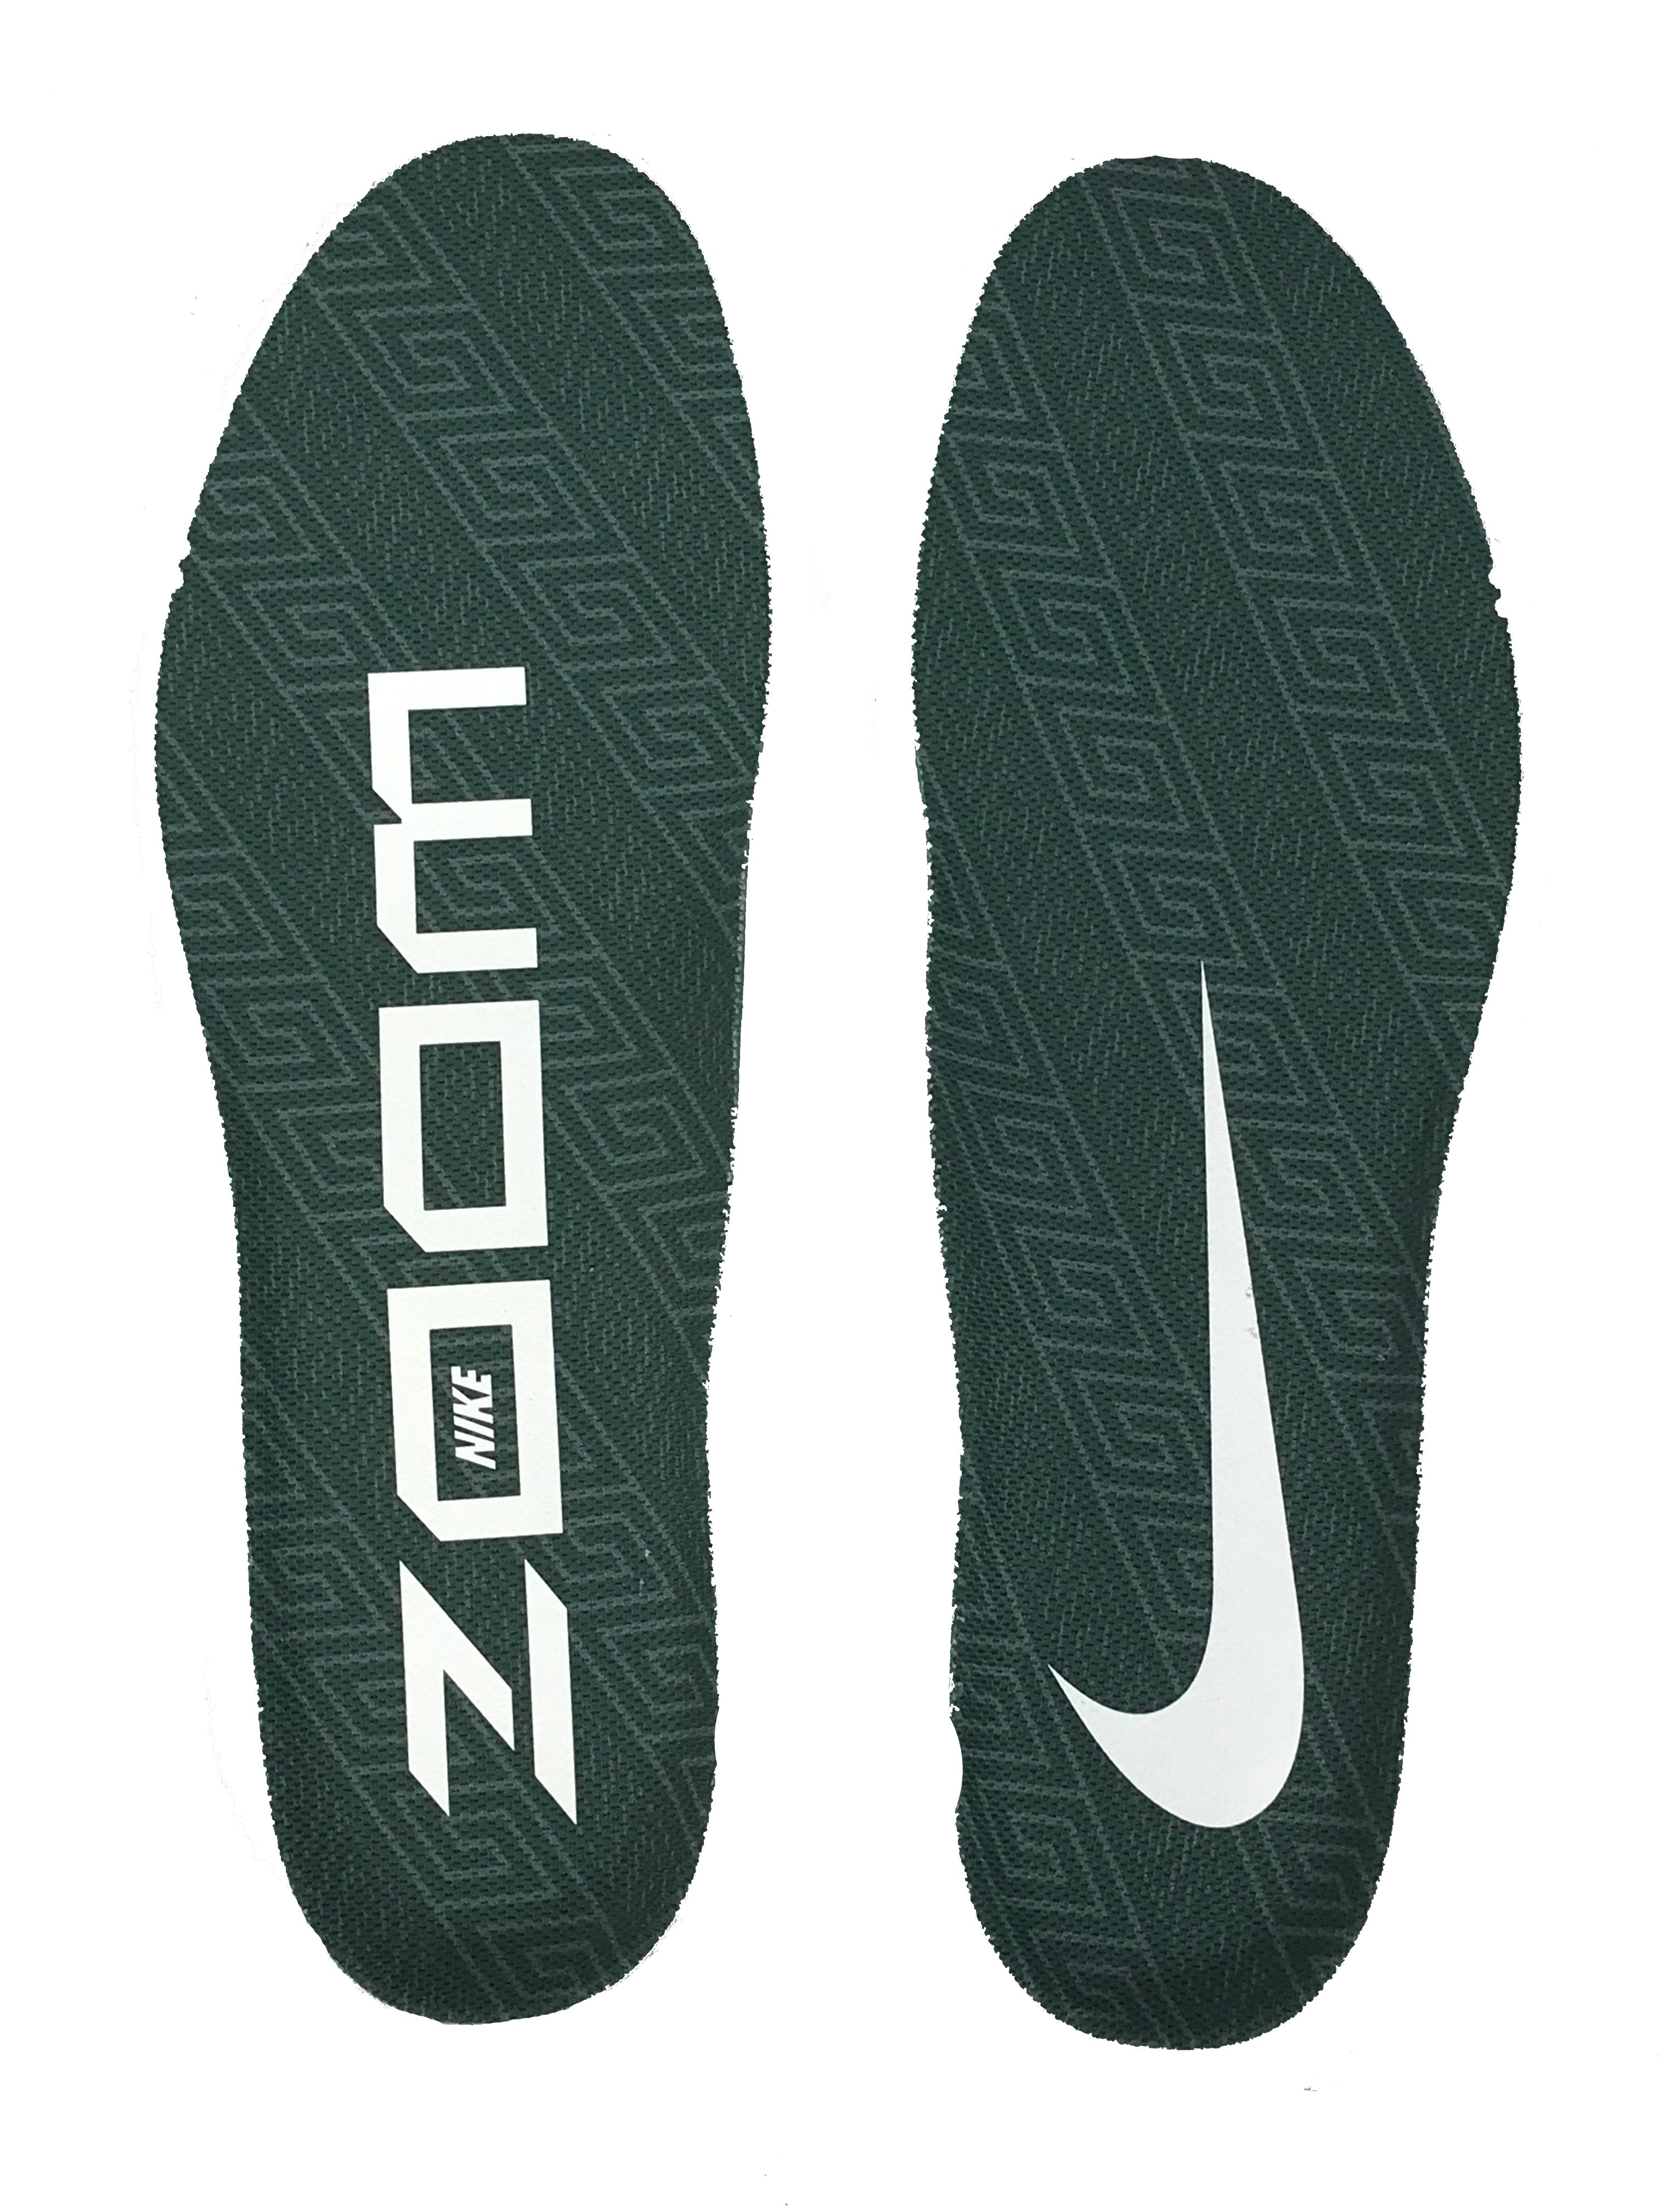 Nike Zoom Green Spartan Insoles Men's Size 15